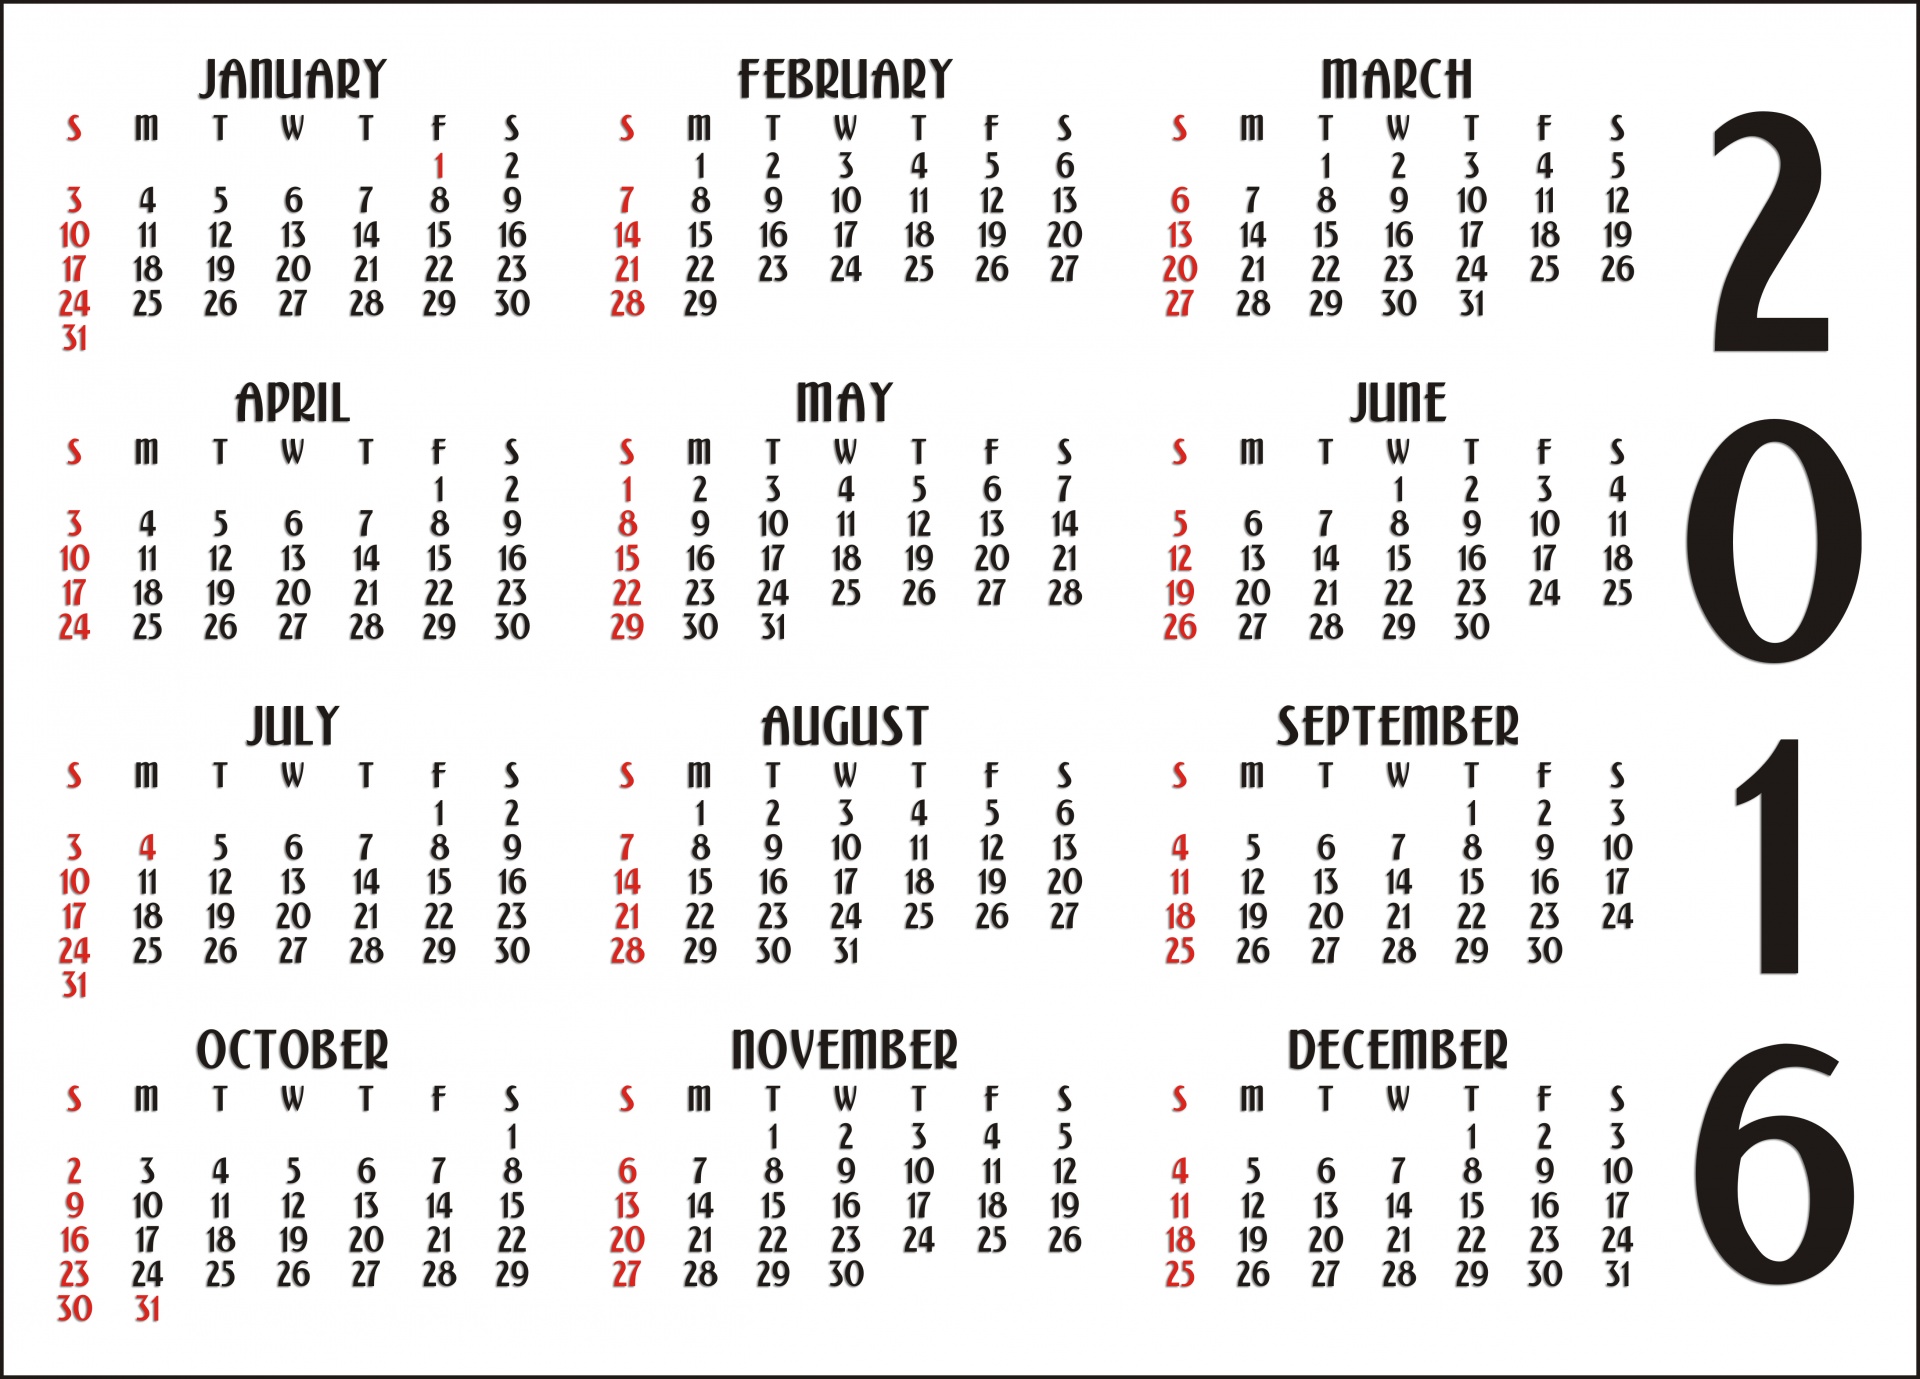 kans Decimale Voorstad Calendar,2016 calendar,months,days,years - free image from needpix.com